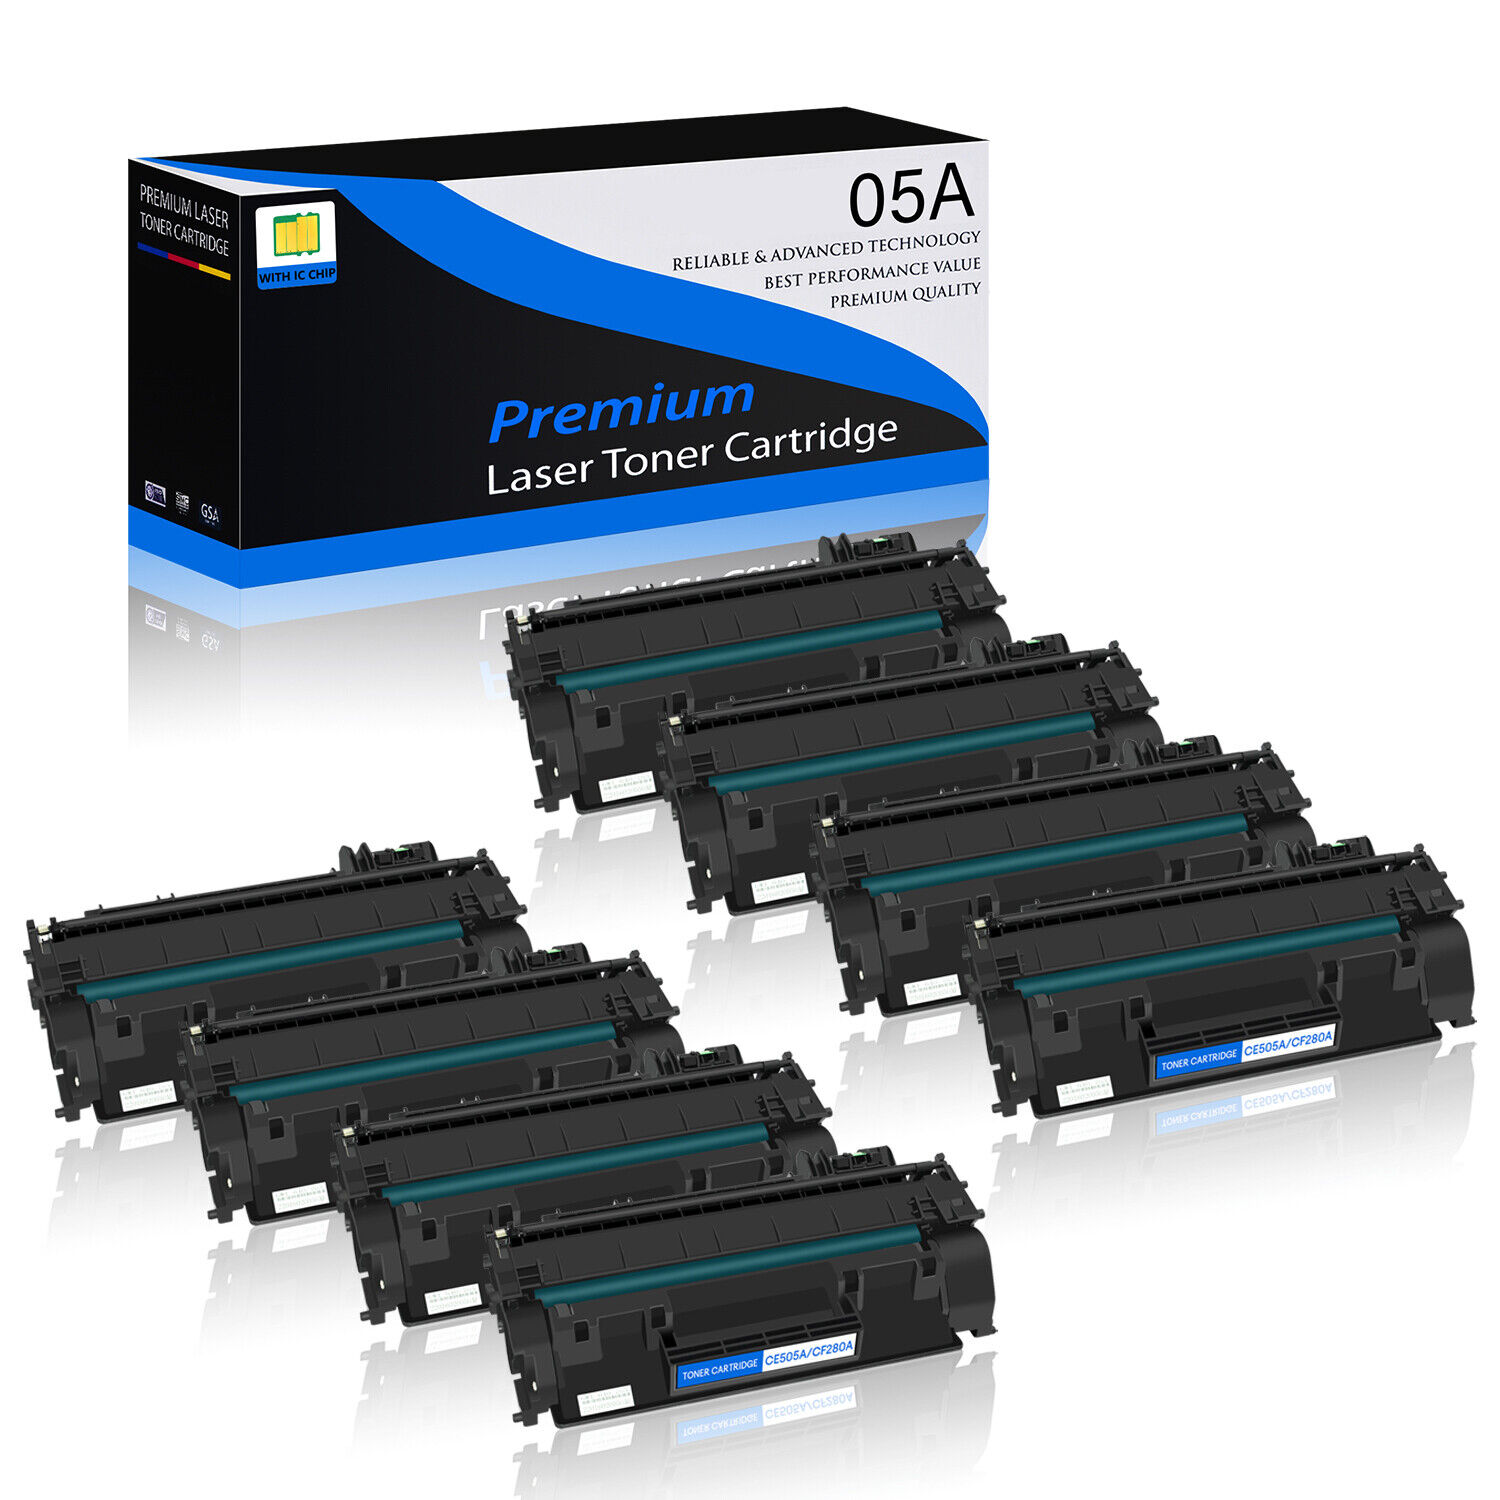 8 Pack - Black CE505A Laser Toner Cartridge for HP 05A LaserJet P2055dn P2055x